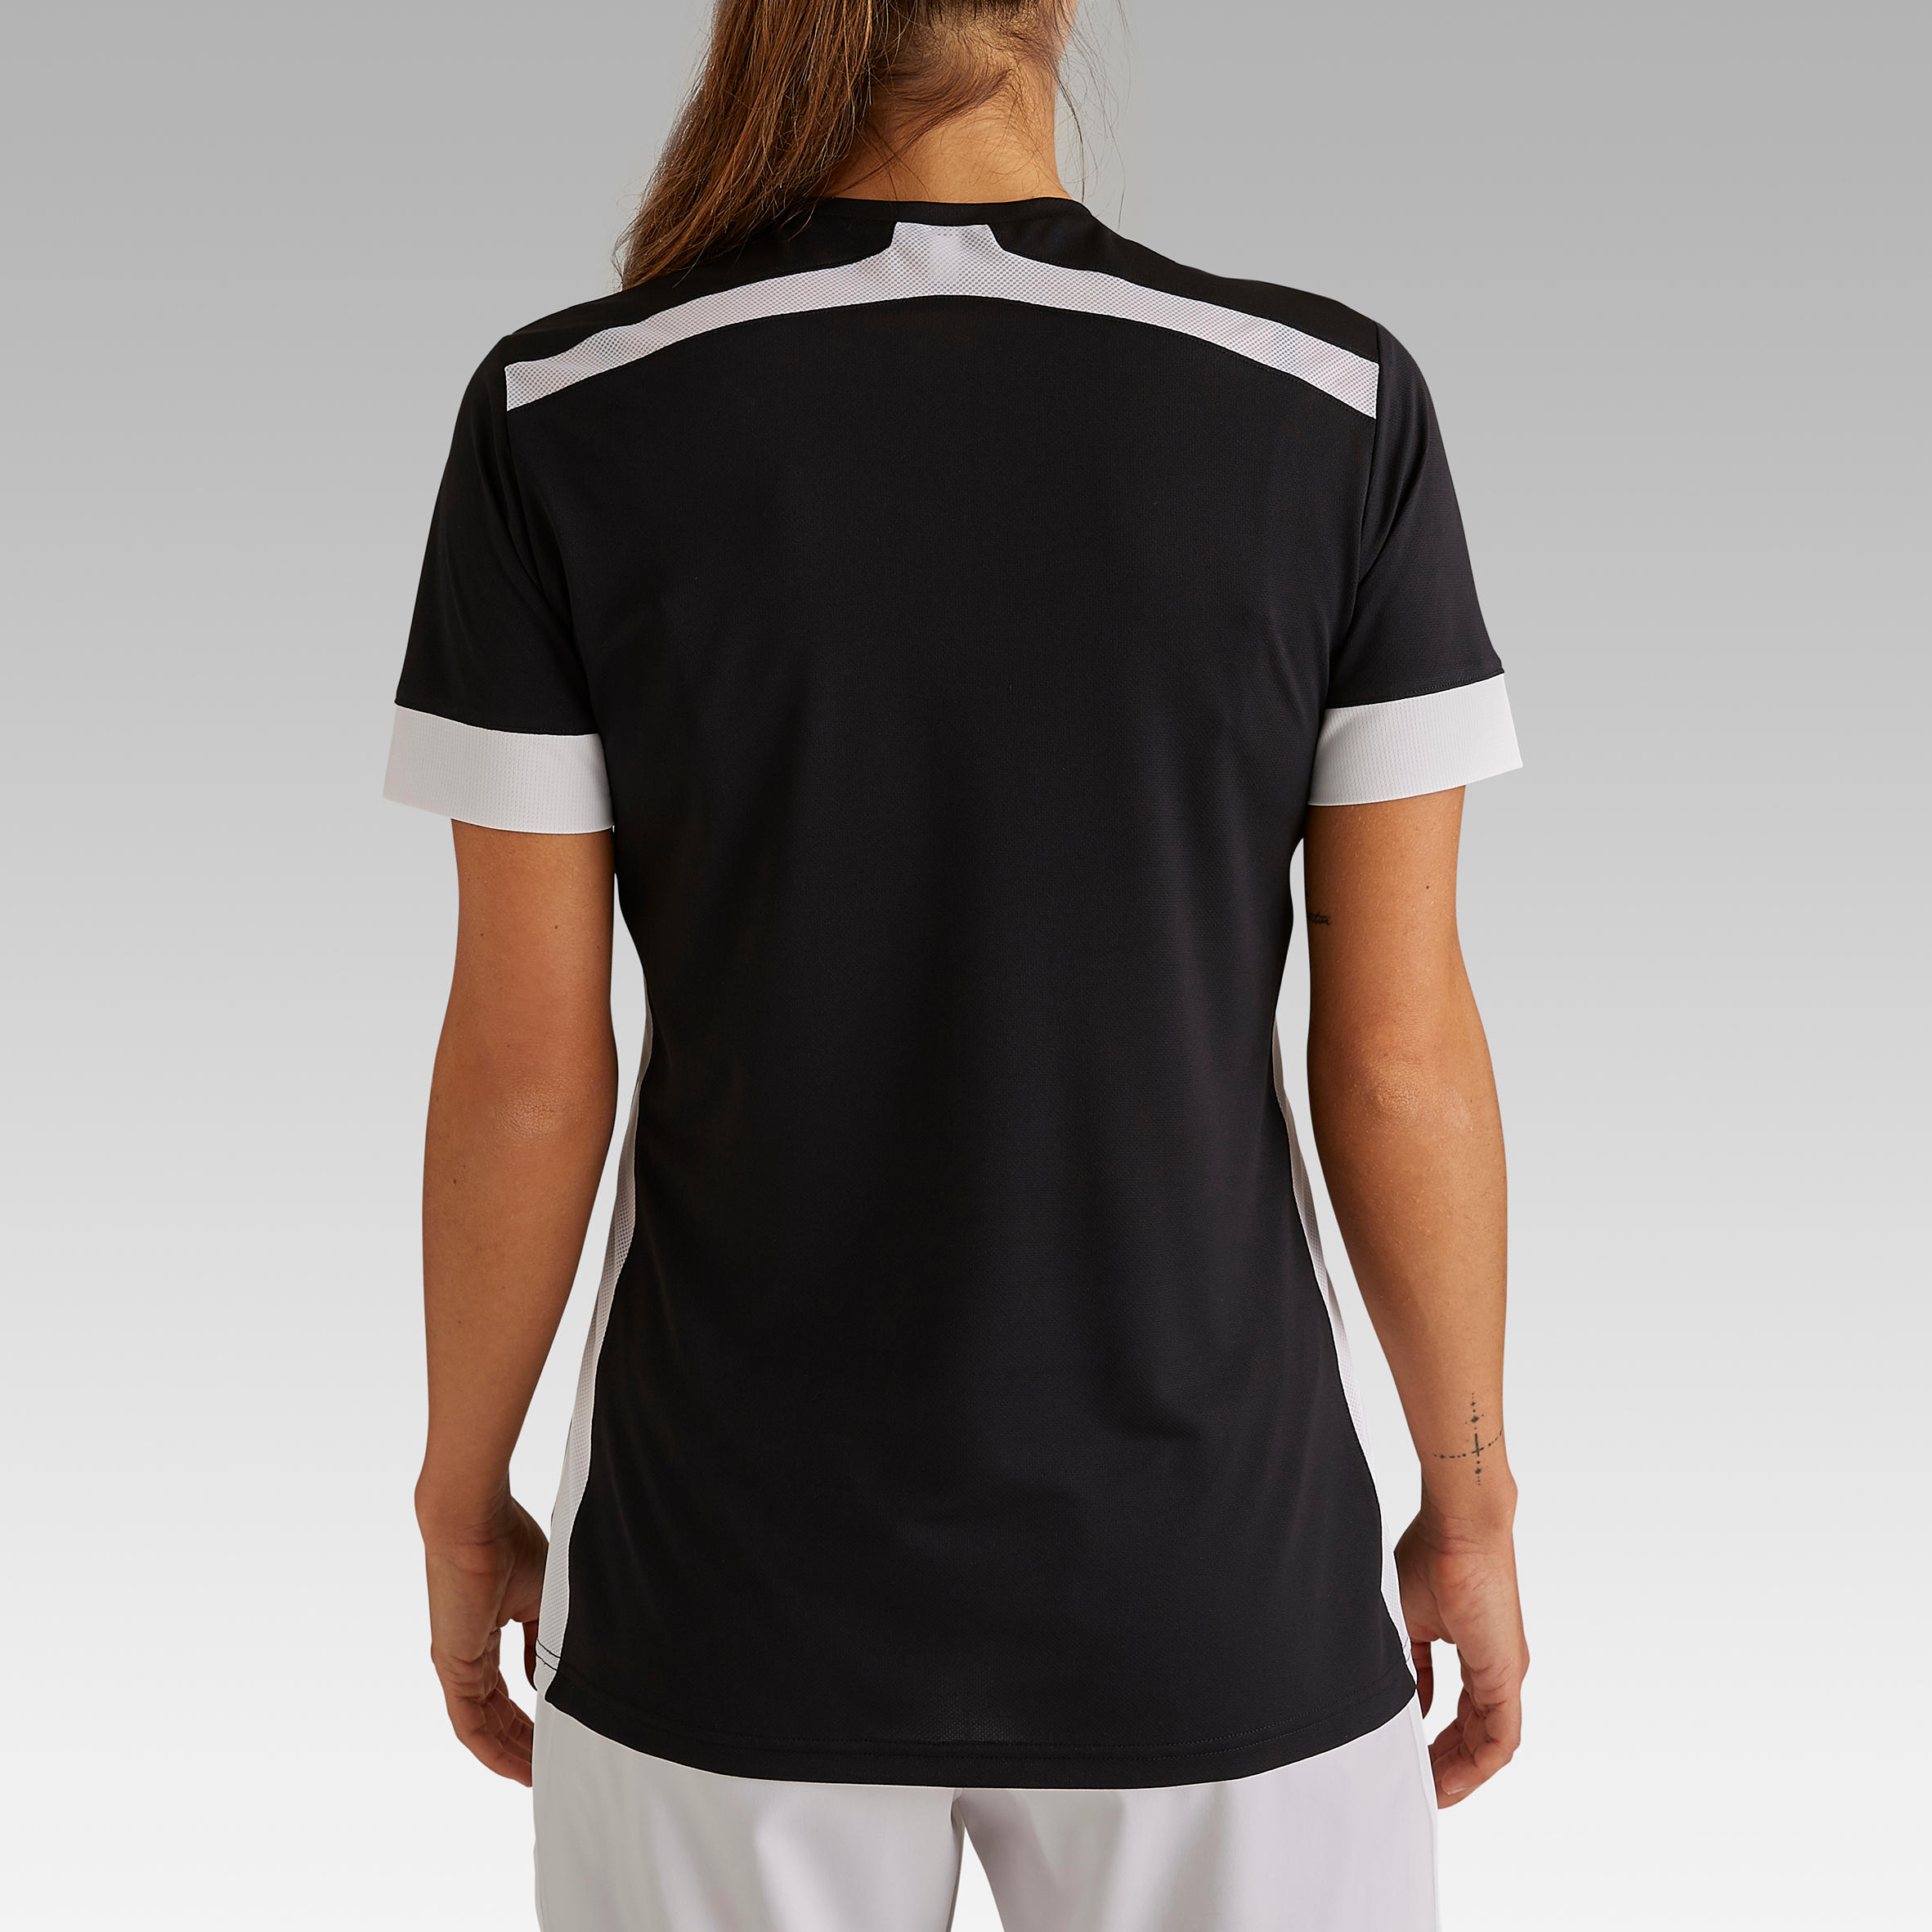 F500 Women's Football Jersey - Black/White 2/9